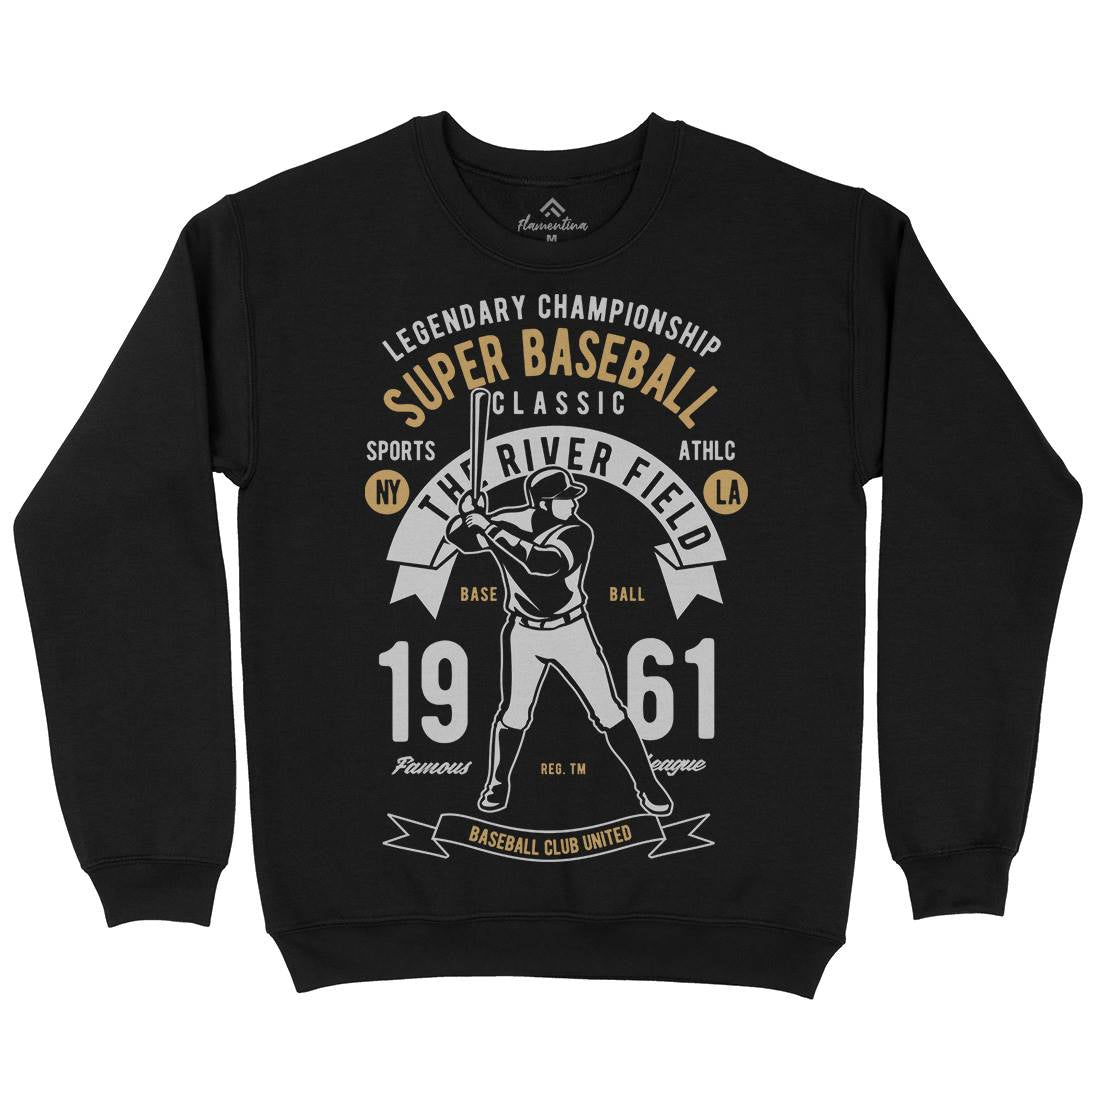 Super Baseball Mens Crew Neck Sweatshirt Sport B455